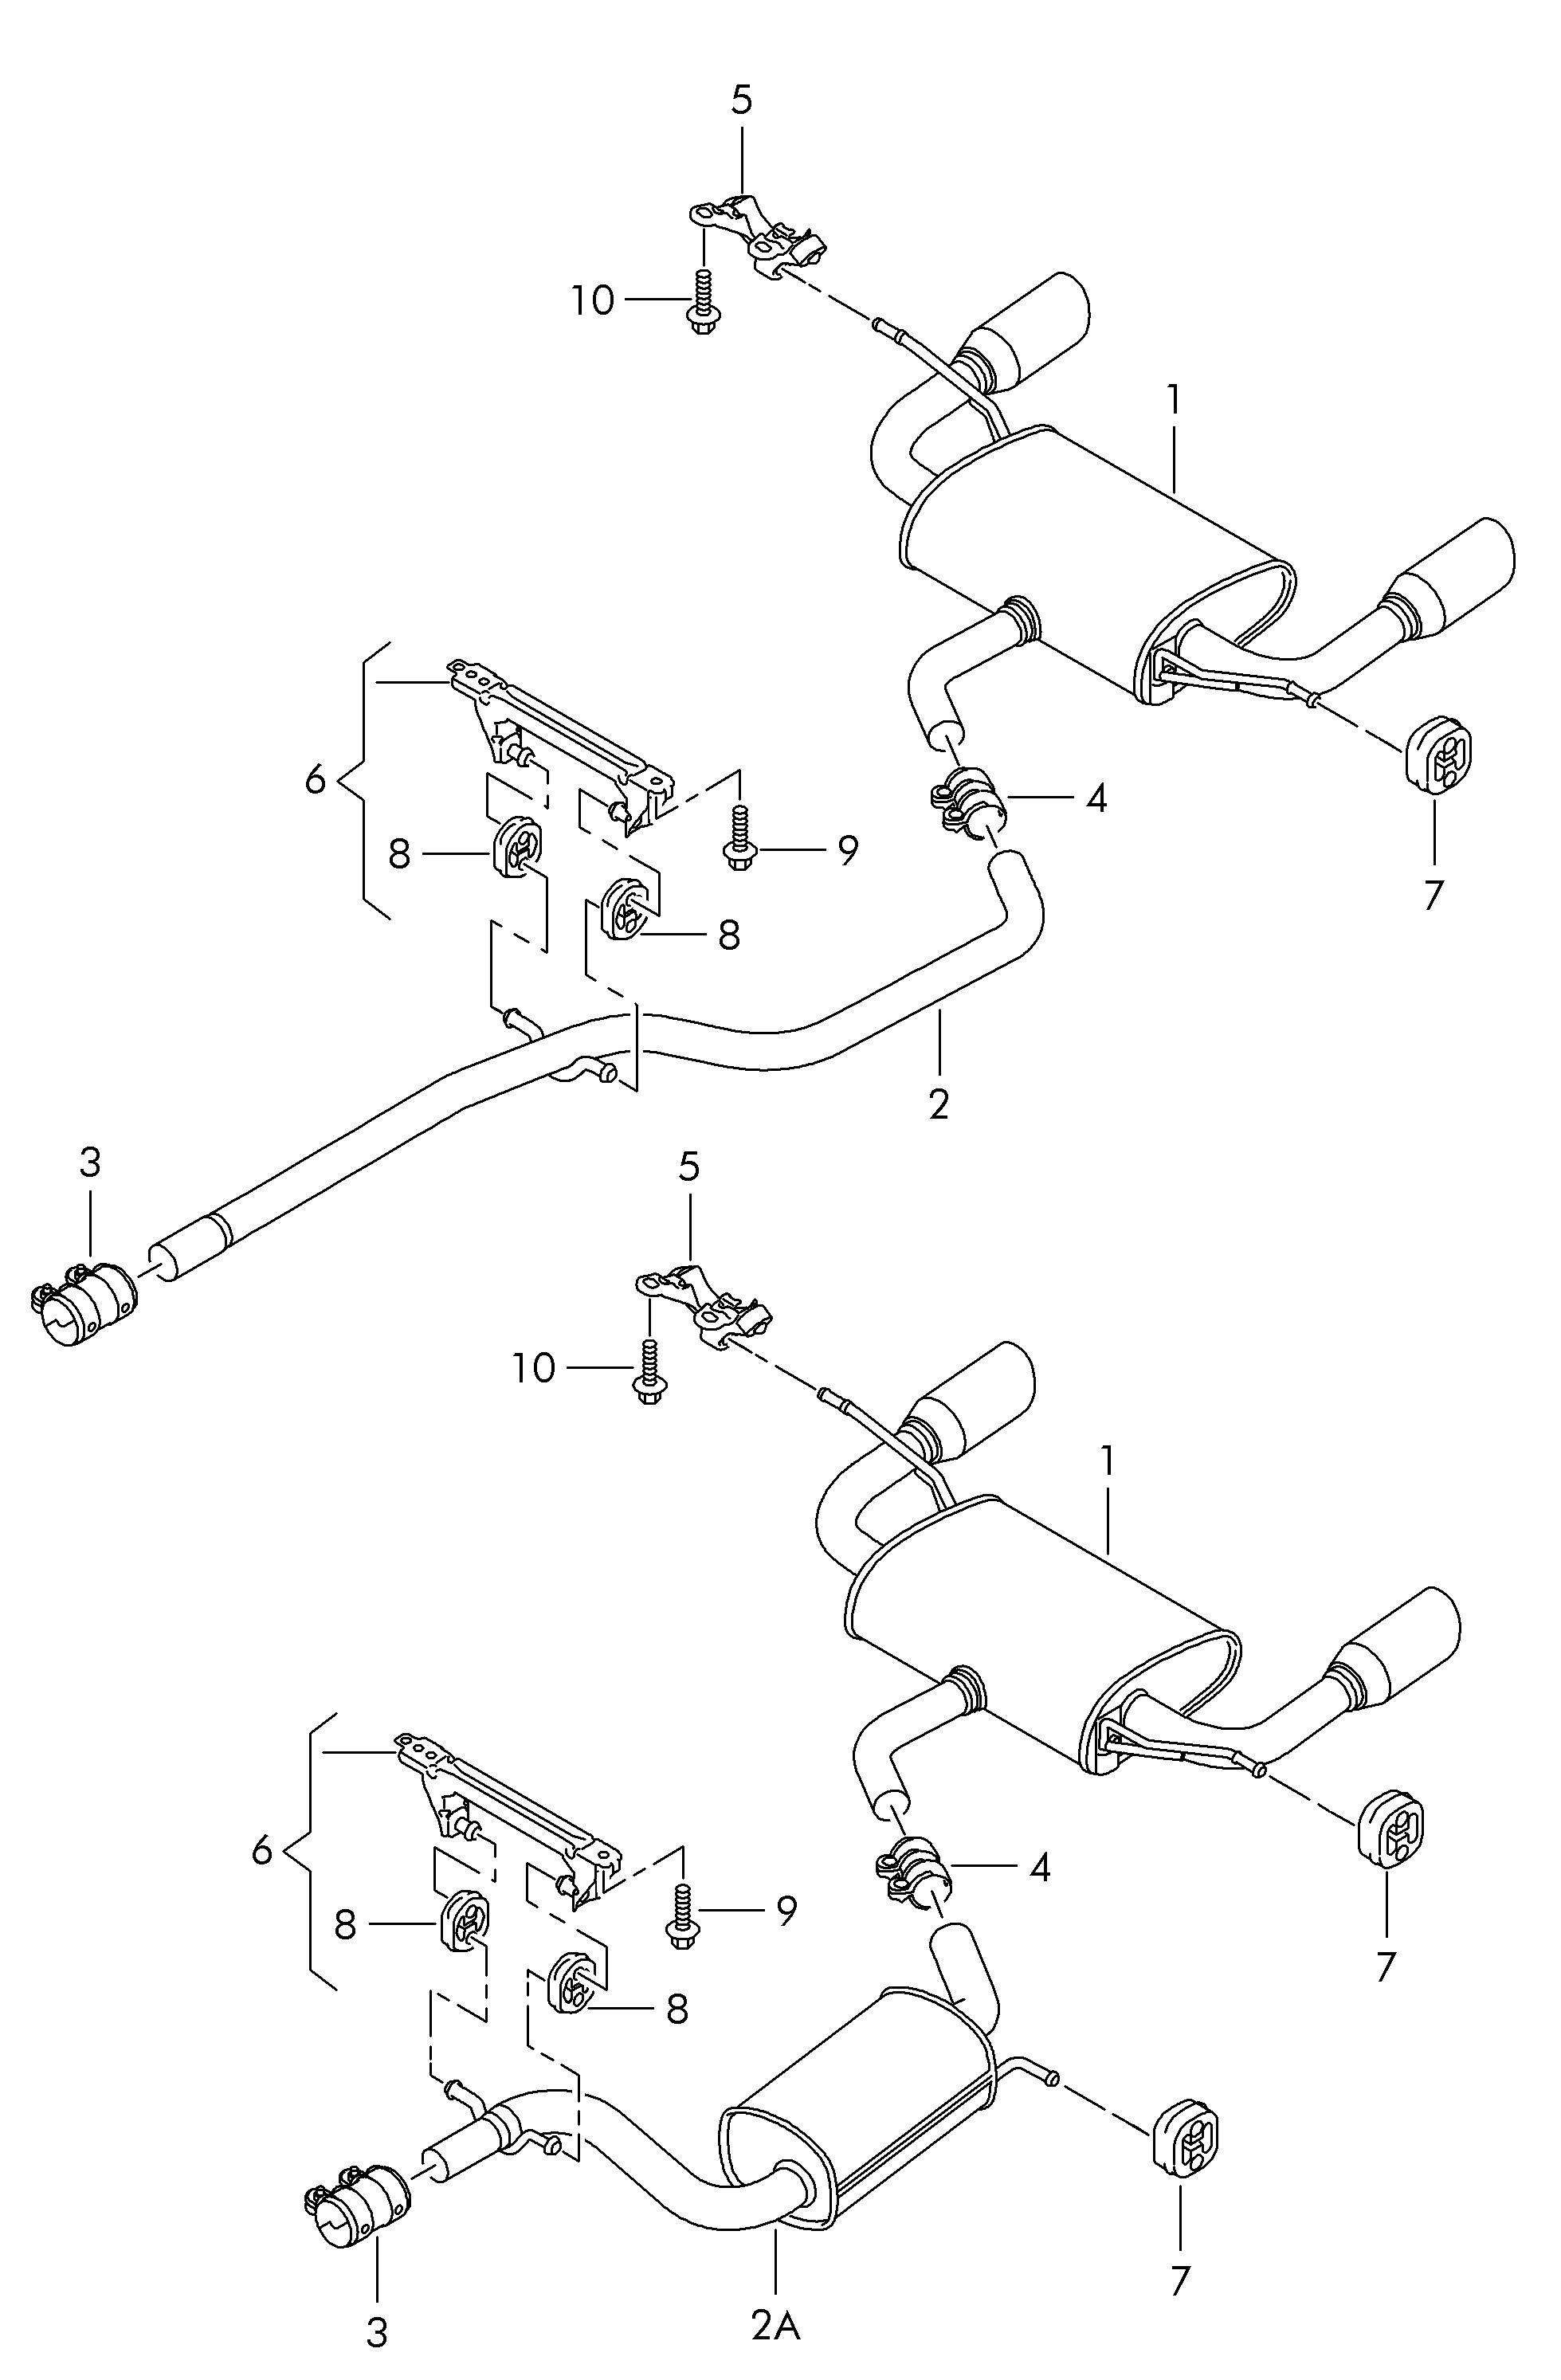 intermediate pipe with rear
silencer; front silen... - Leon/Leon 4(LE)  